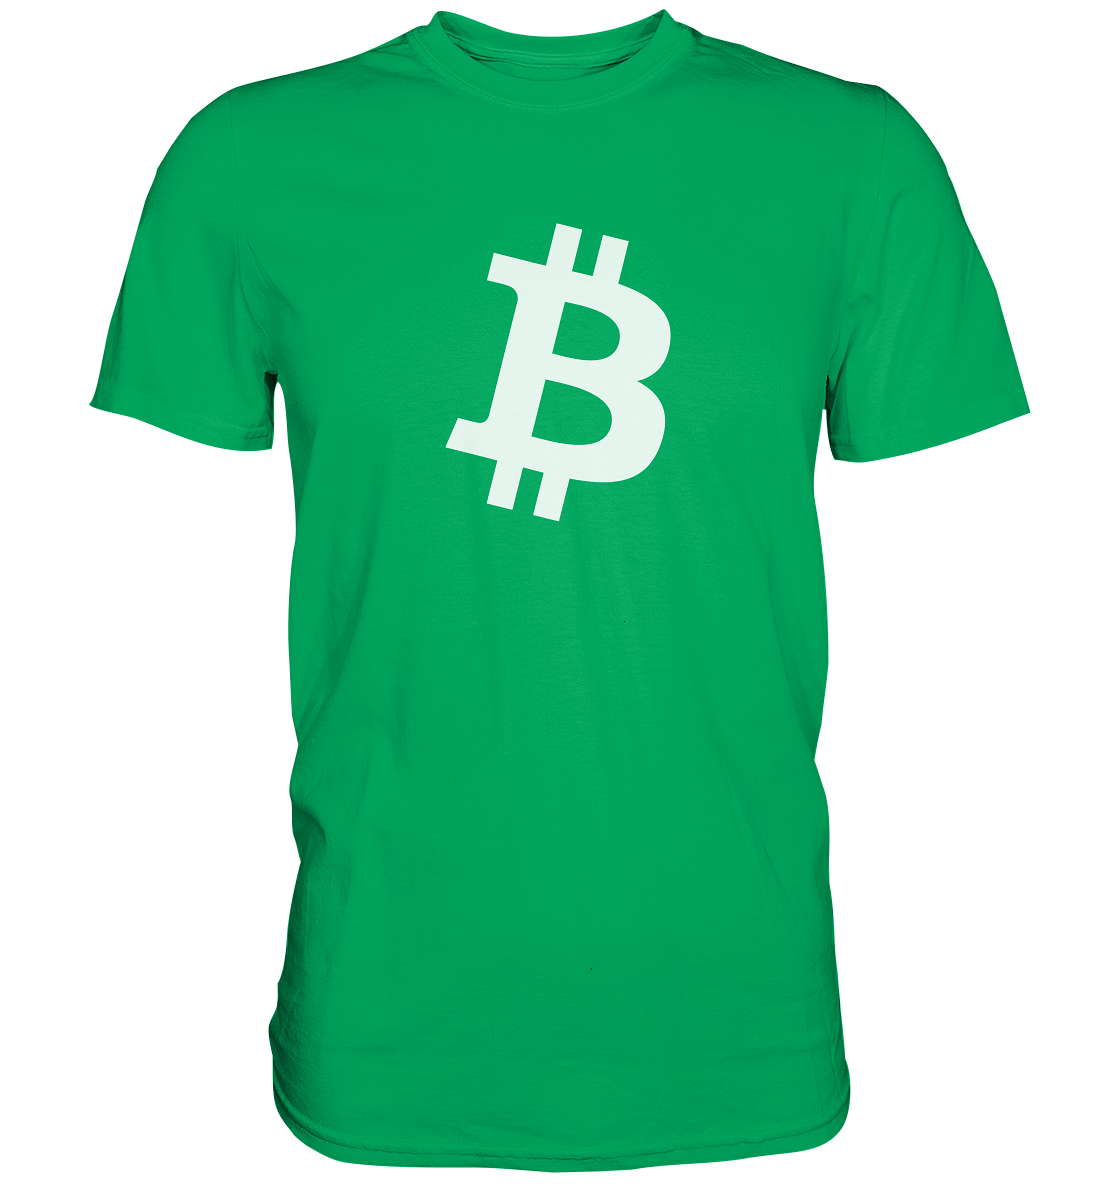 Bitcoin "simple B white" - Premium Shirt